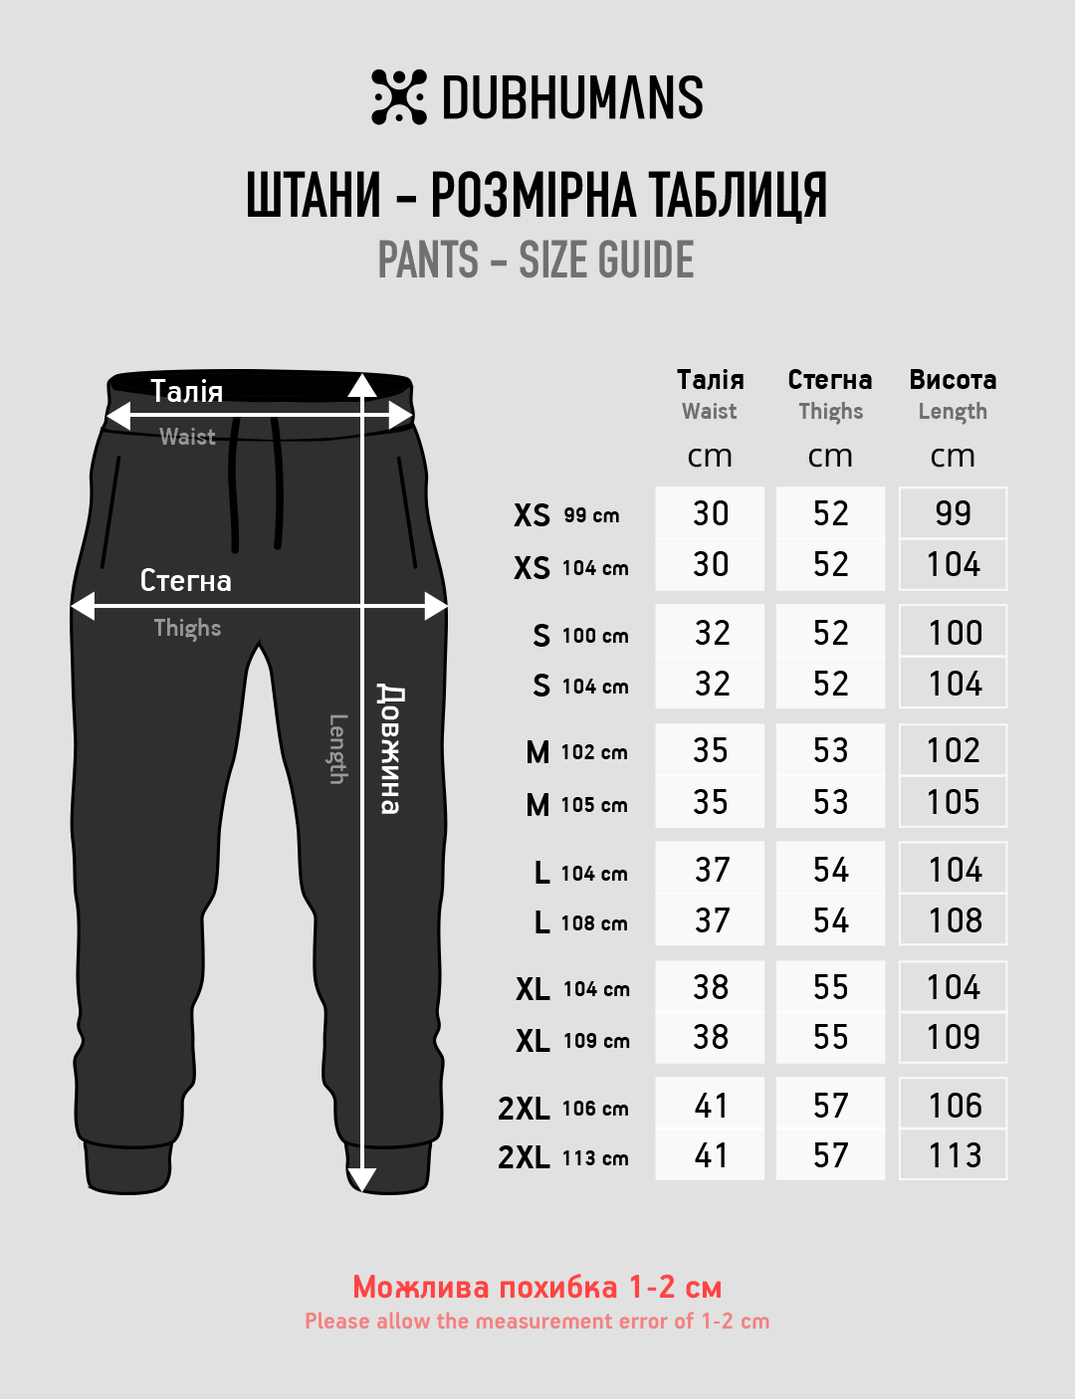 Men's tracksuit set with t-shirt “Nation Code”, Black, 2XS, XS (99  cm)